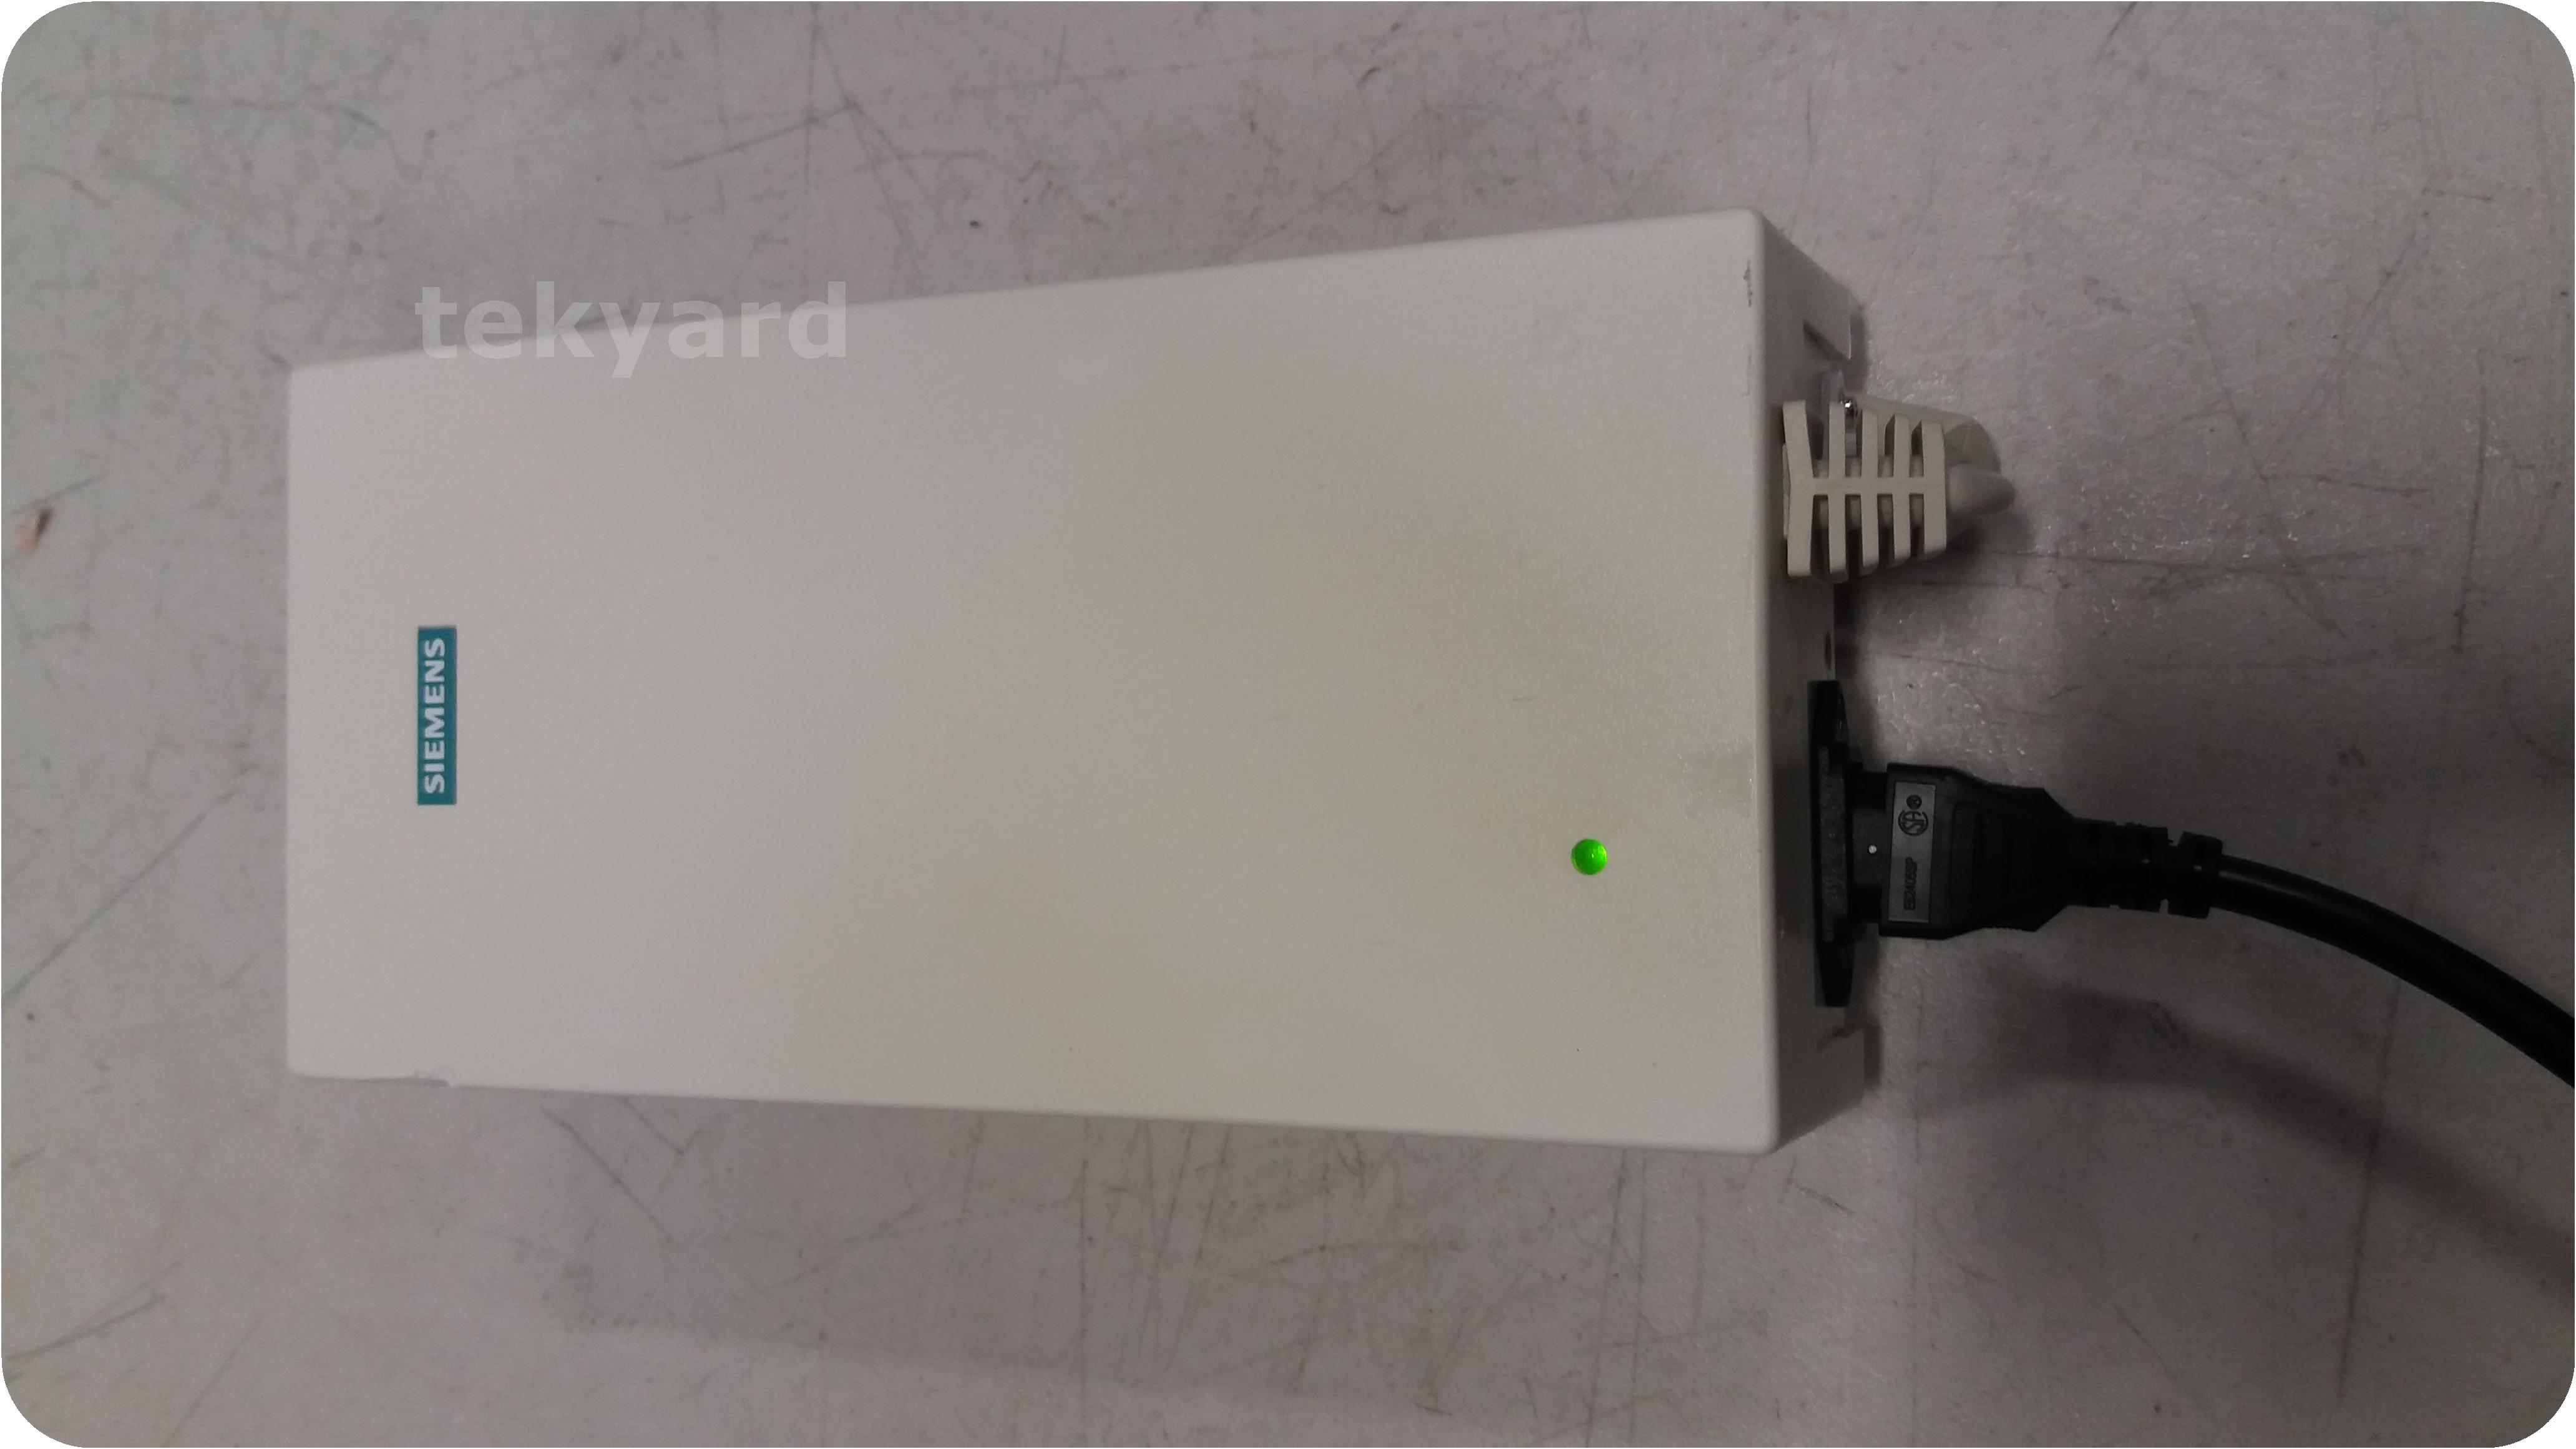 tekyard, LLC. - 160462-Siemens DC Pwr Sup IDS Switch 5955393 E530U 